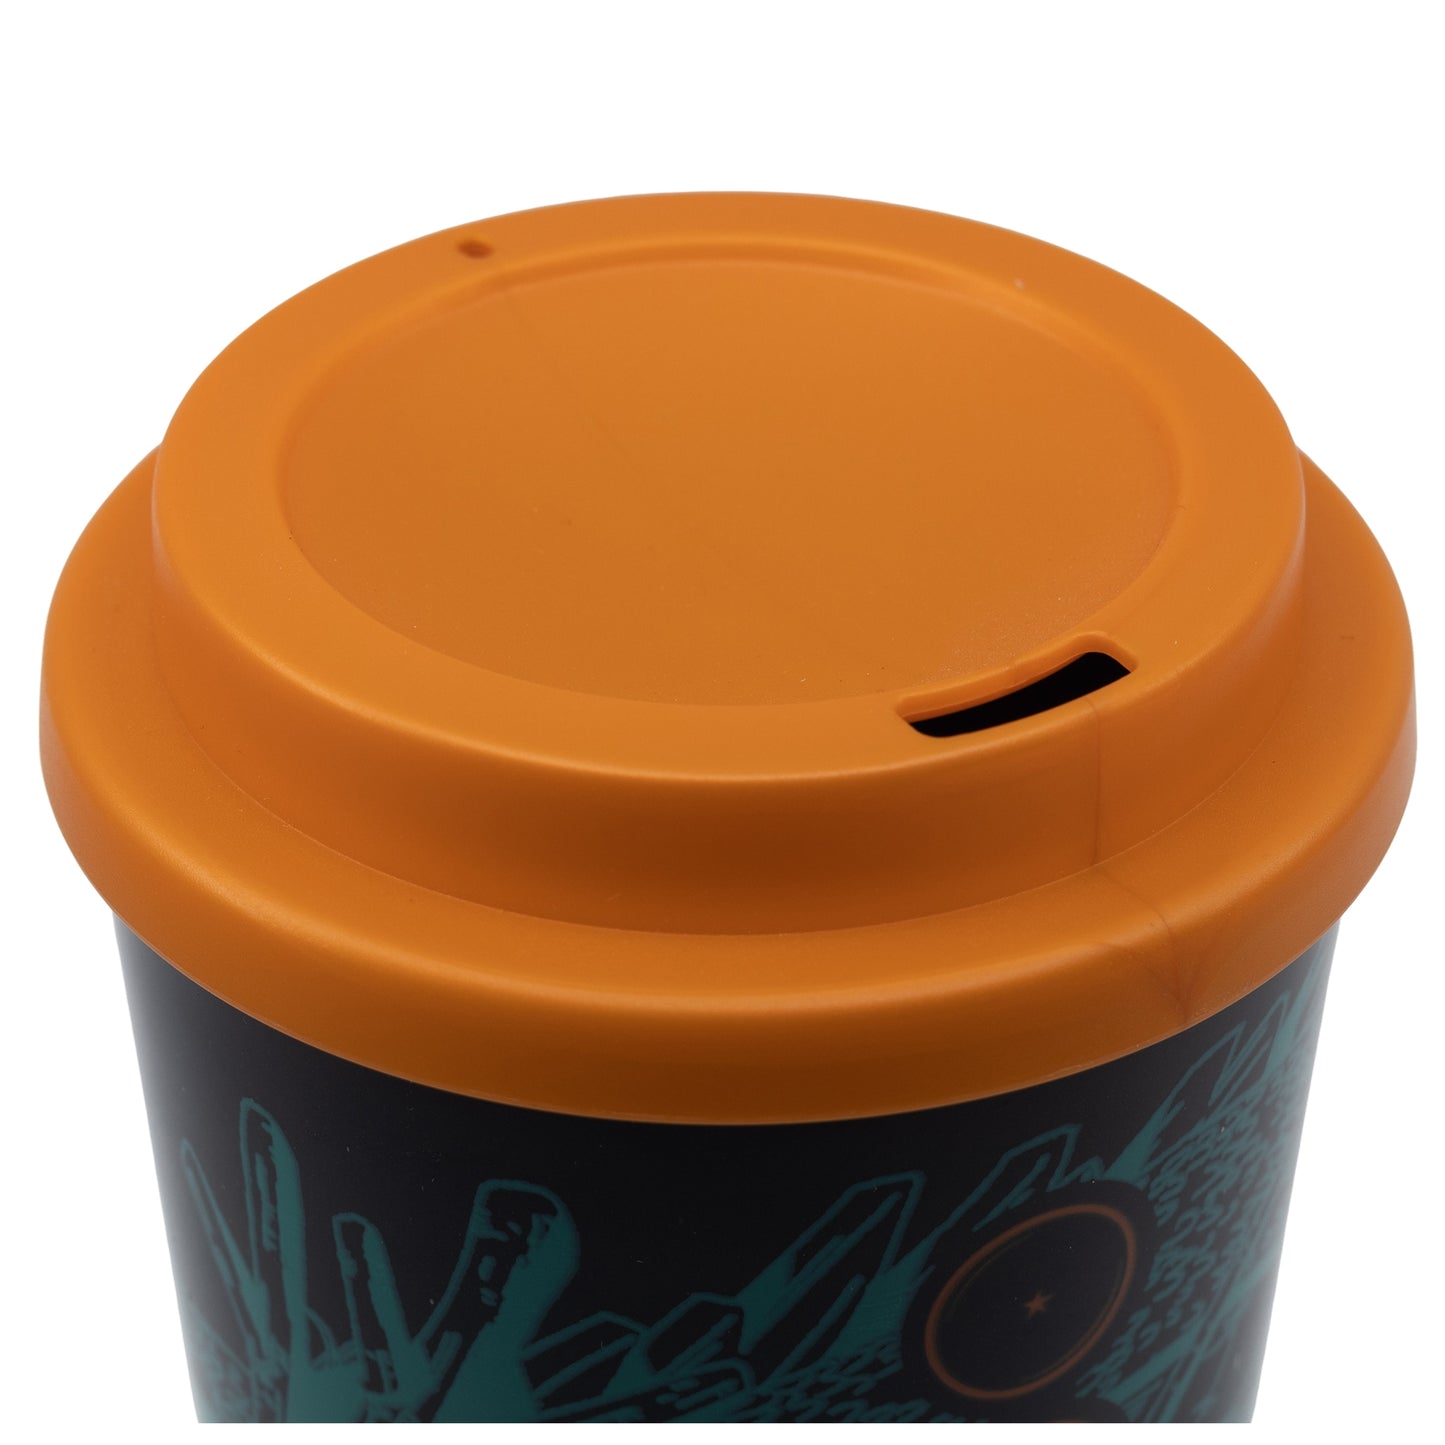 Anime Dragon Ball Kaffeebecher to-go Trinkbecher doppelwandig 520 ml